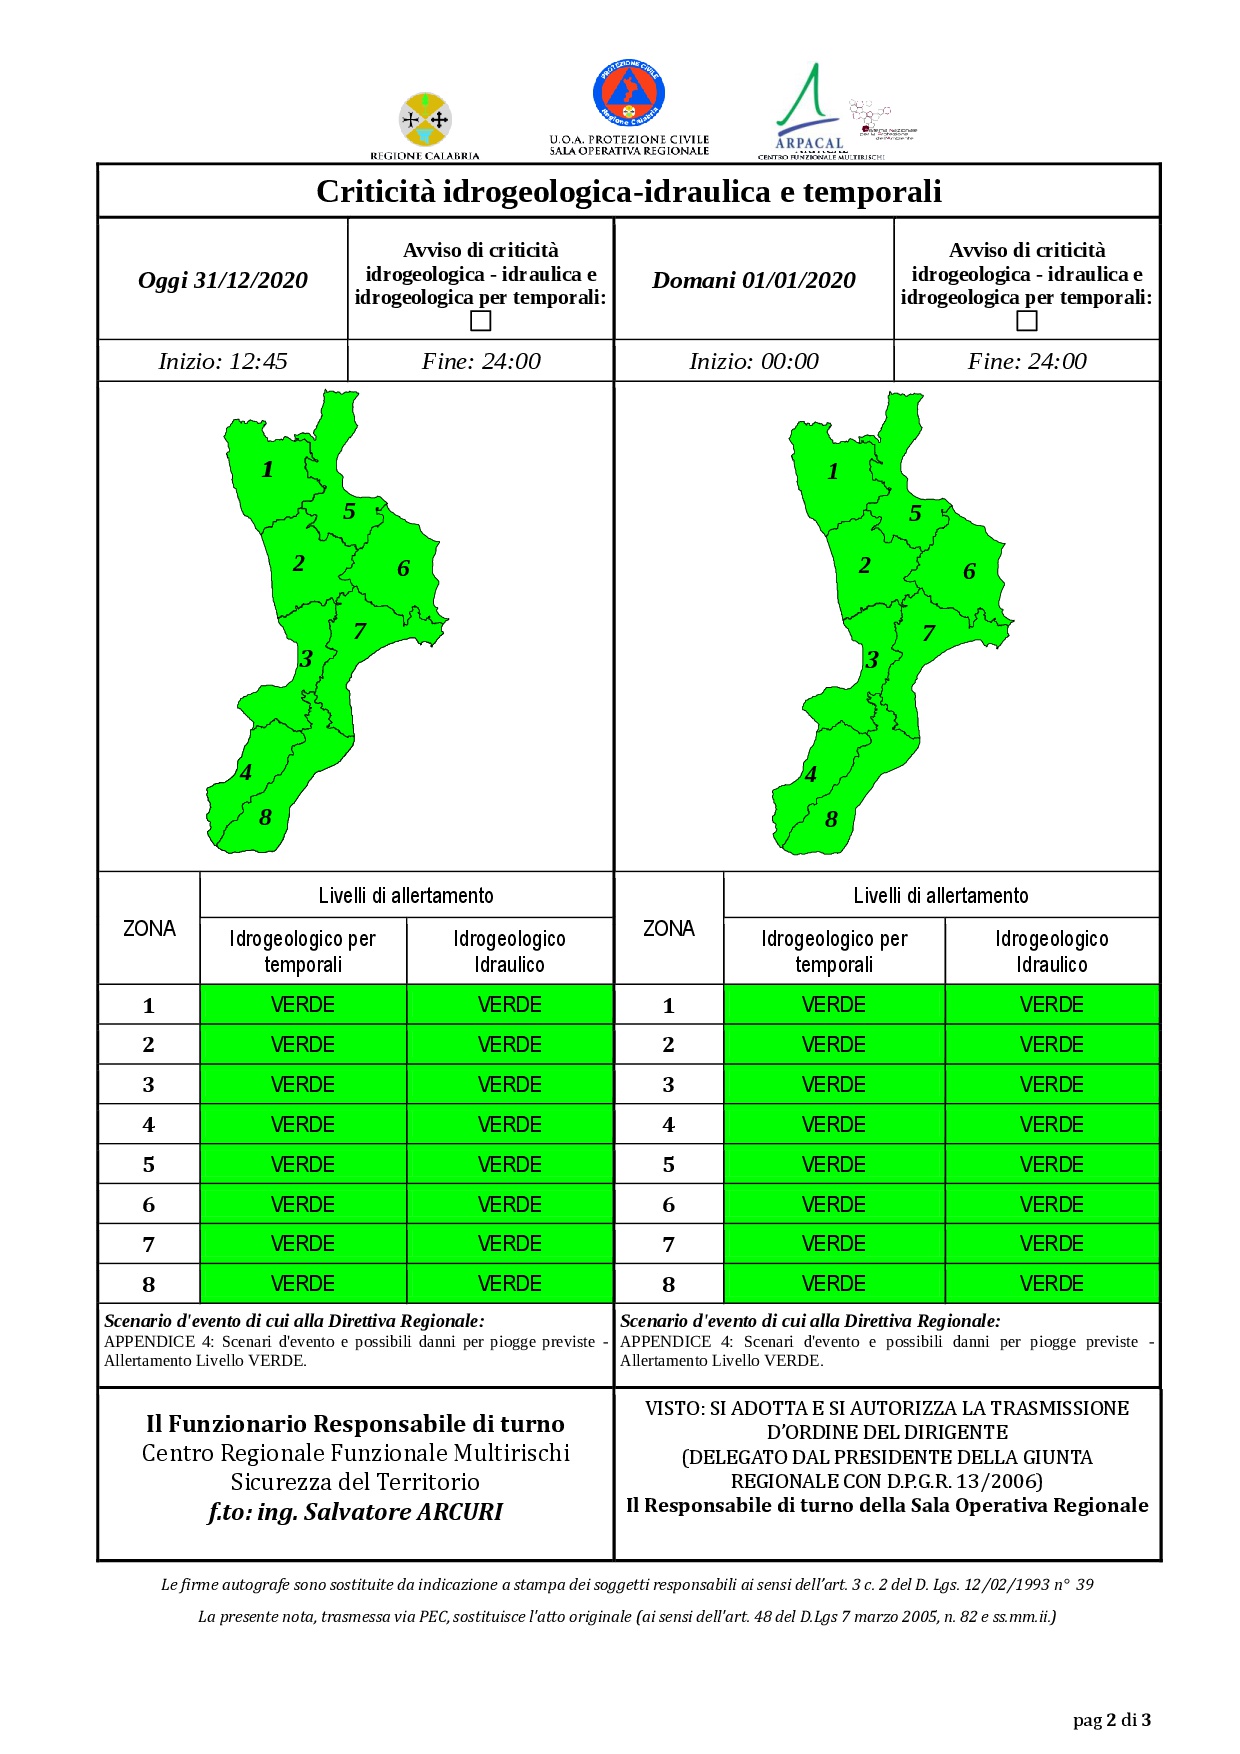 Criticità idrogeologica-idraulica e temporali in Calabria 31-12-2020